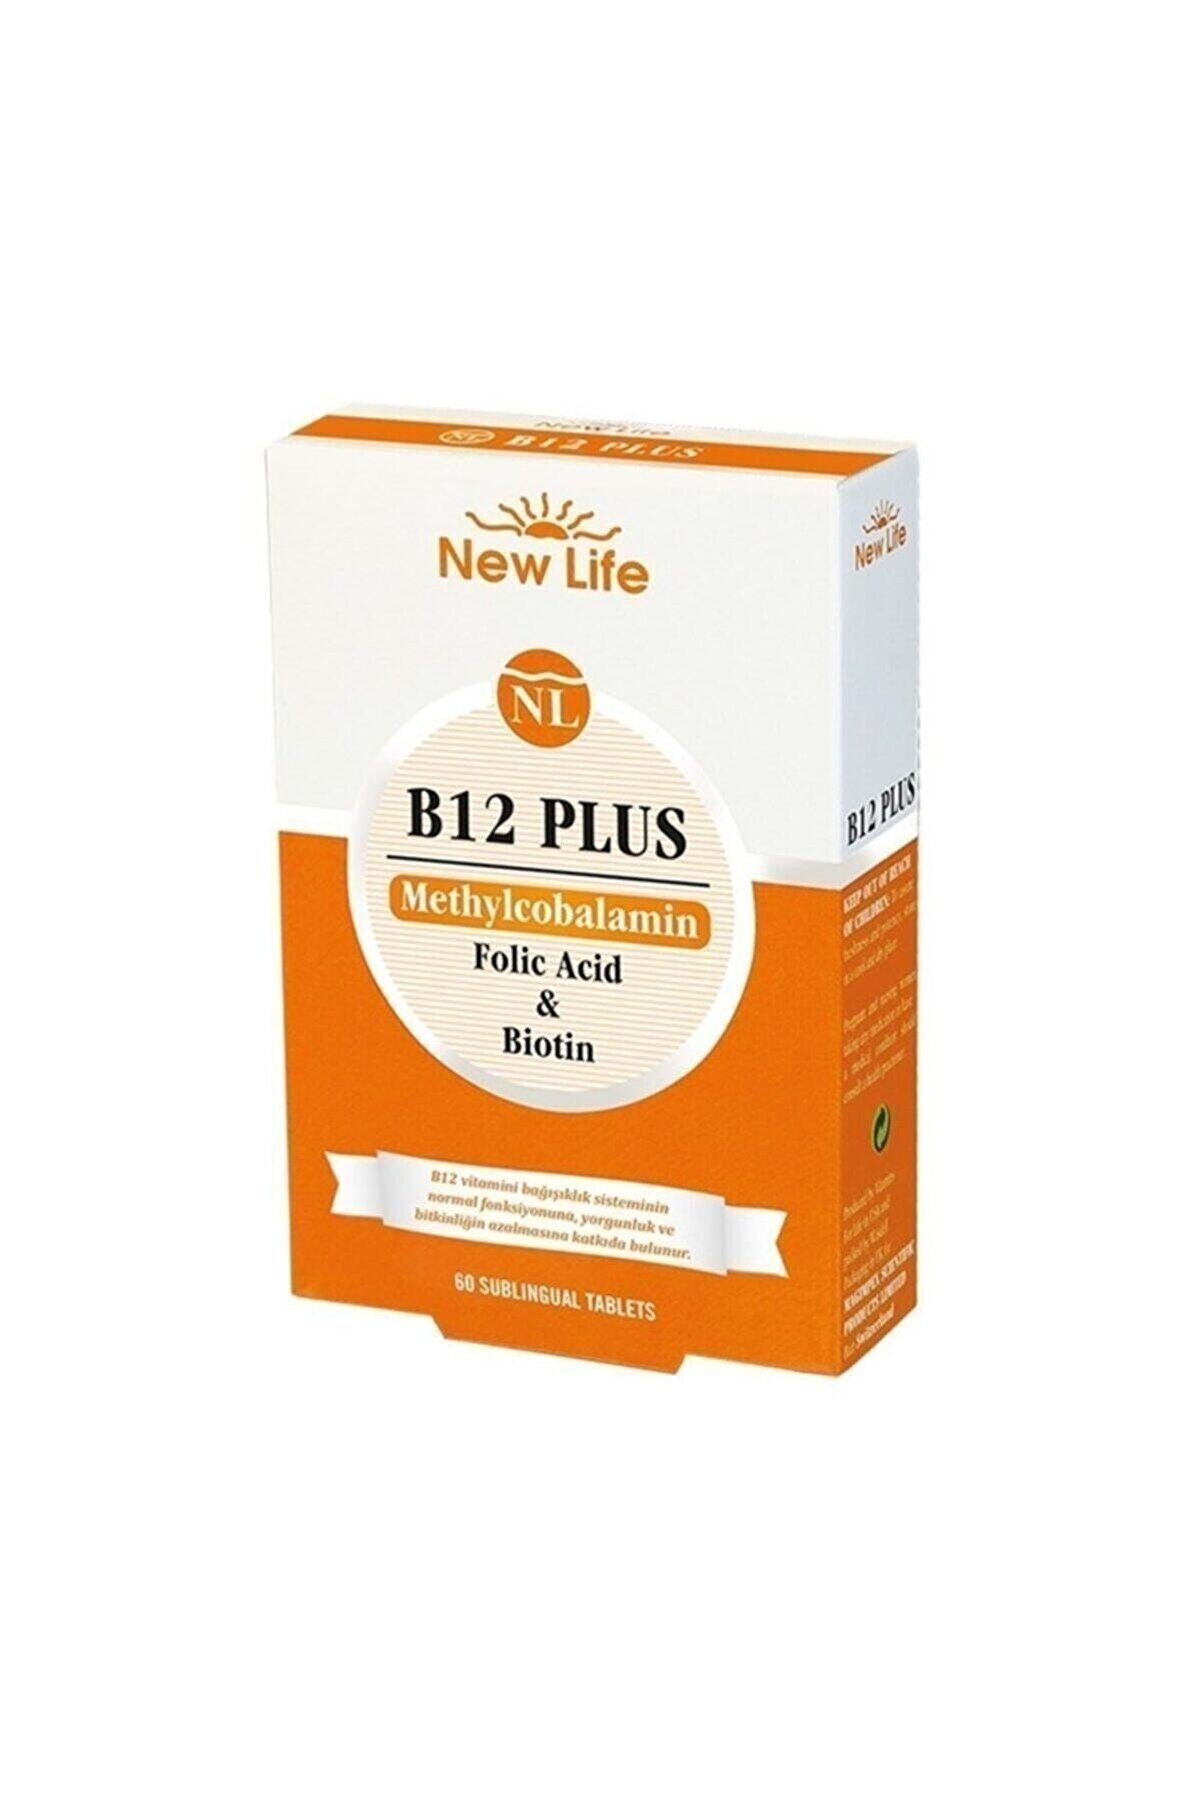 New Life New Lıfe B12 Plus 60 Tablet